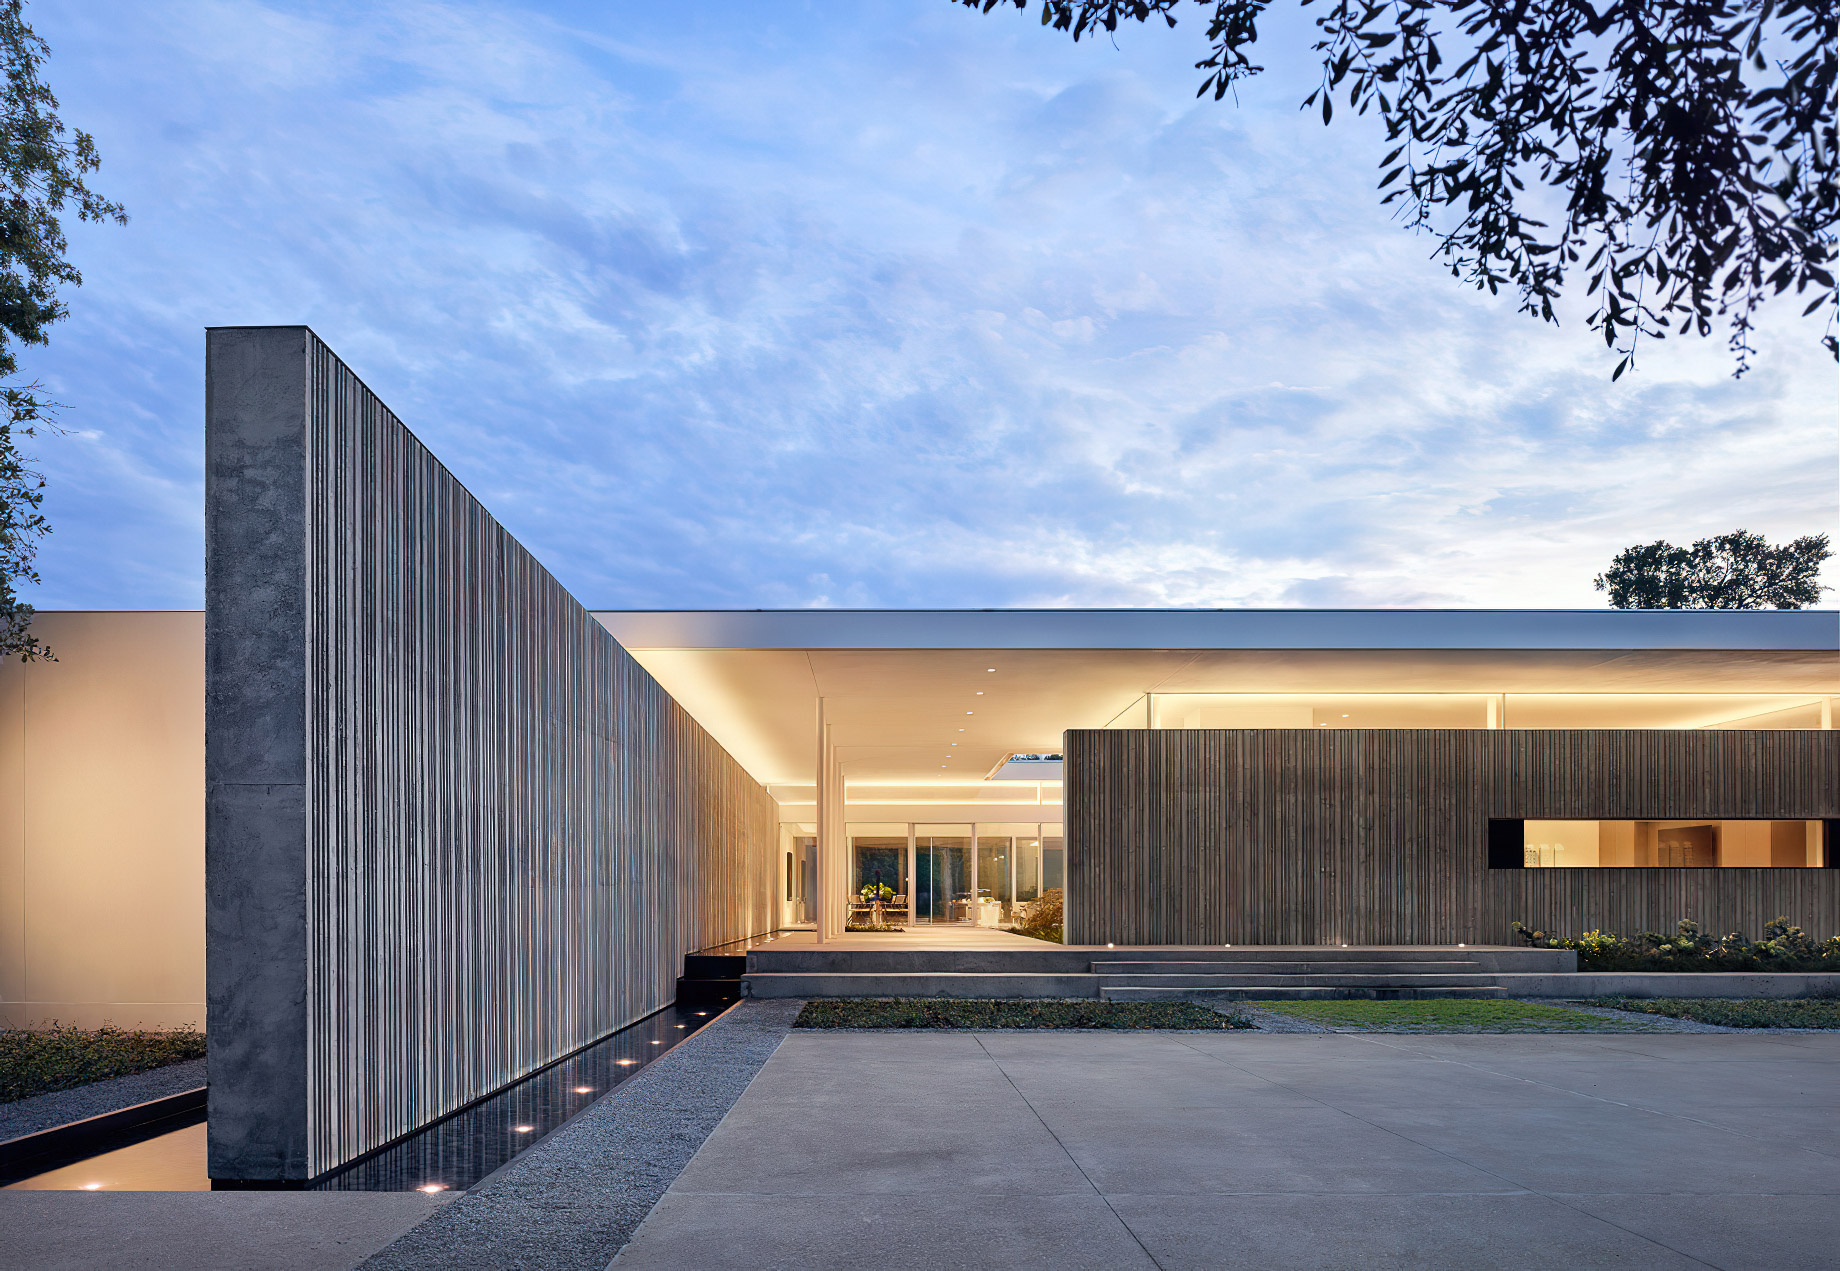 026 – Preston Hollow Brutalist Architecture Residence – Dallas, TX, USA – Sunset Interior View